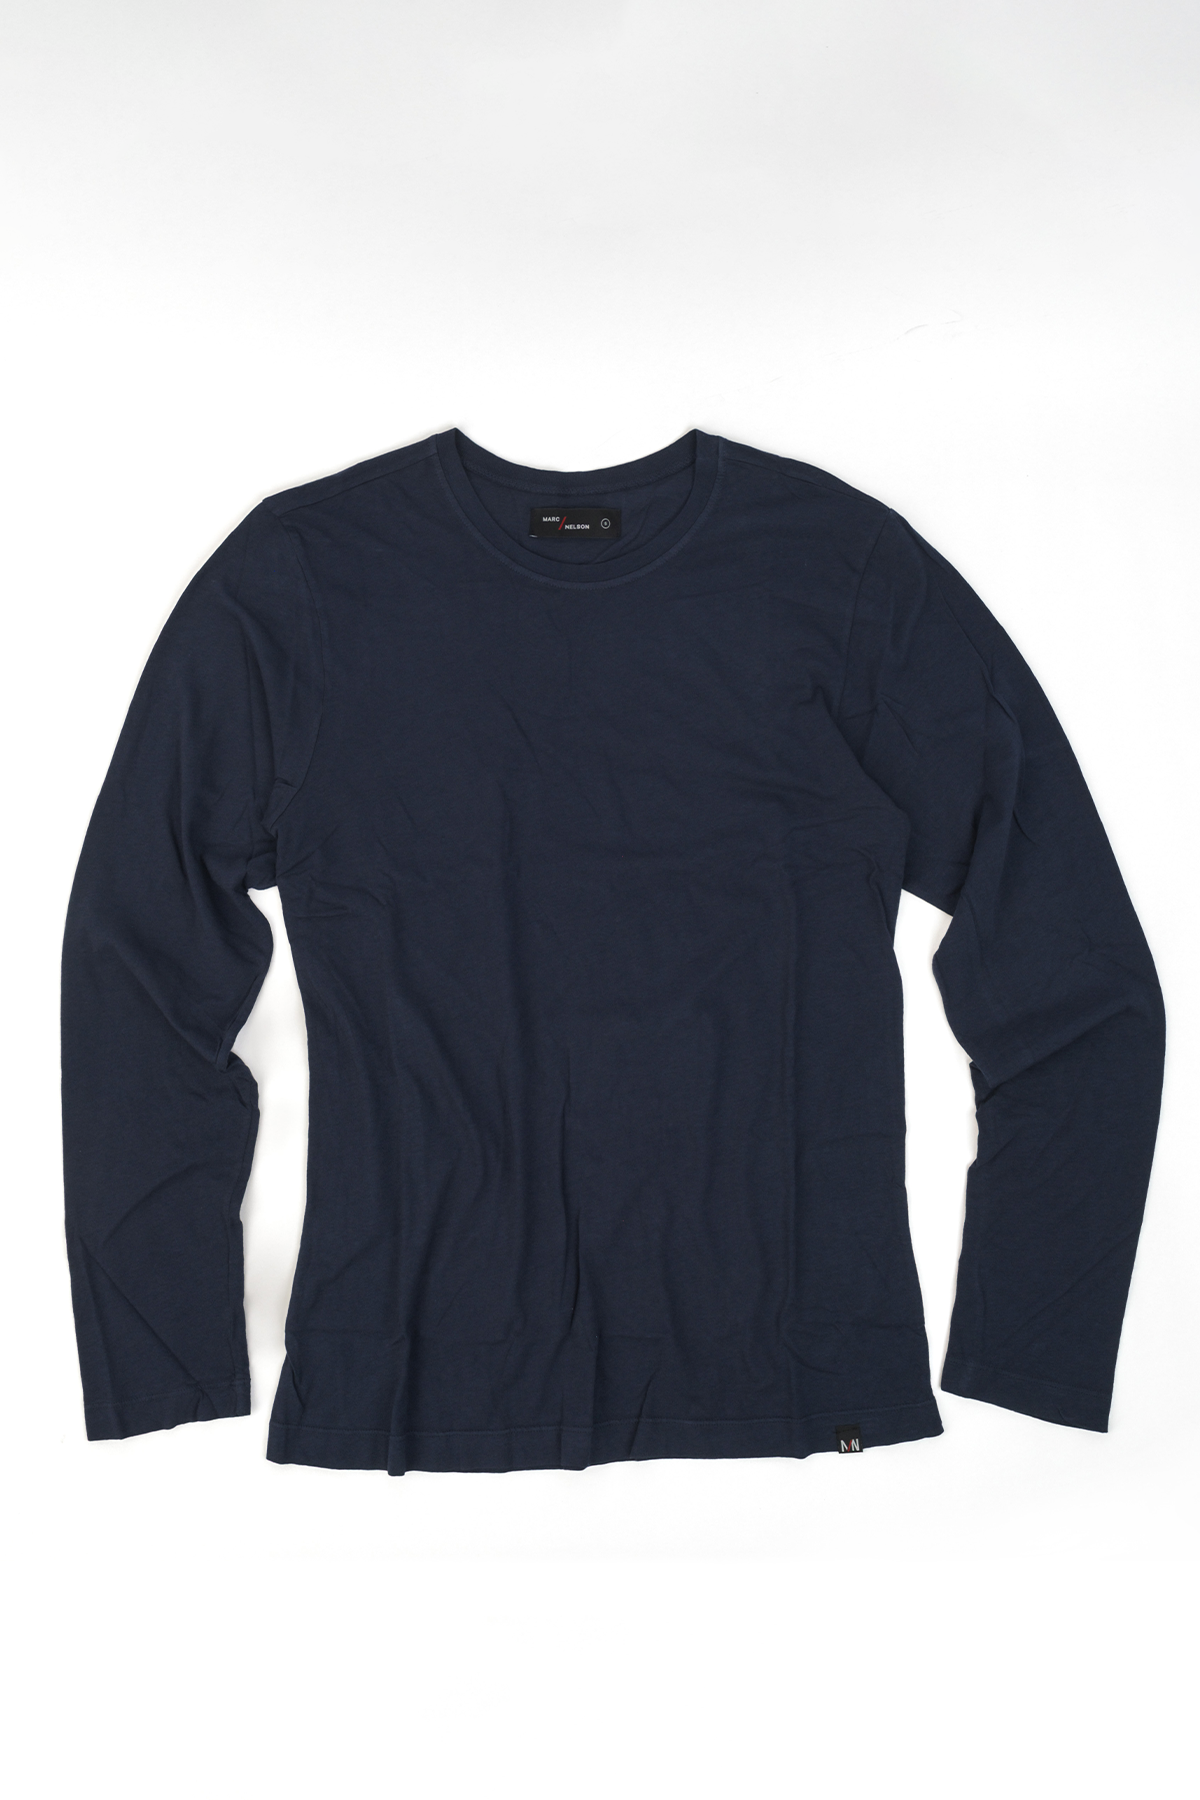 Cotton Modal Long-Sleeve T-Shirt